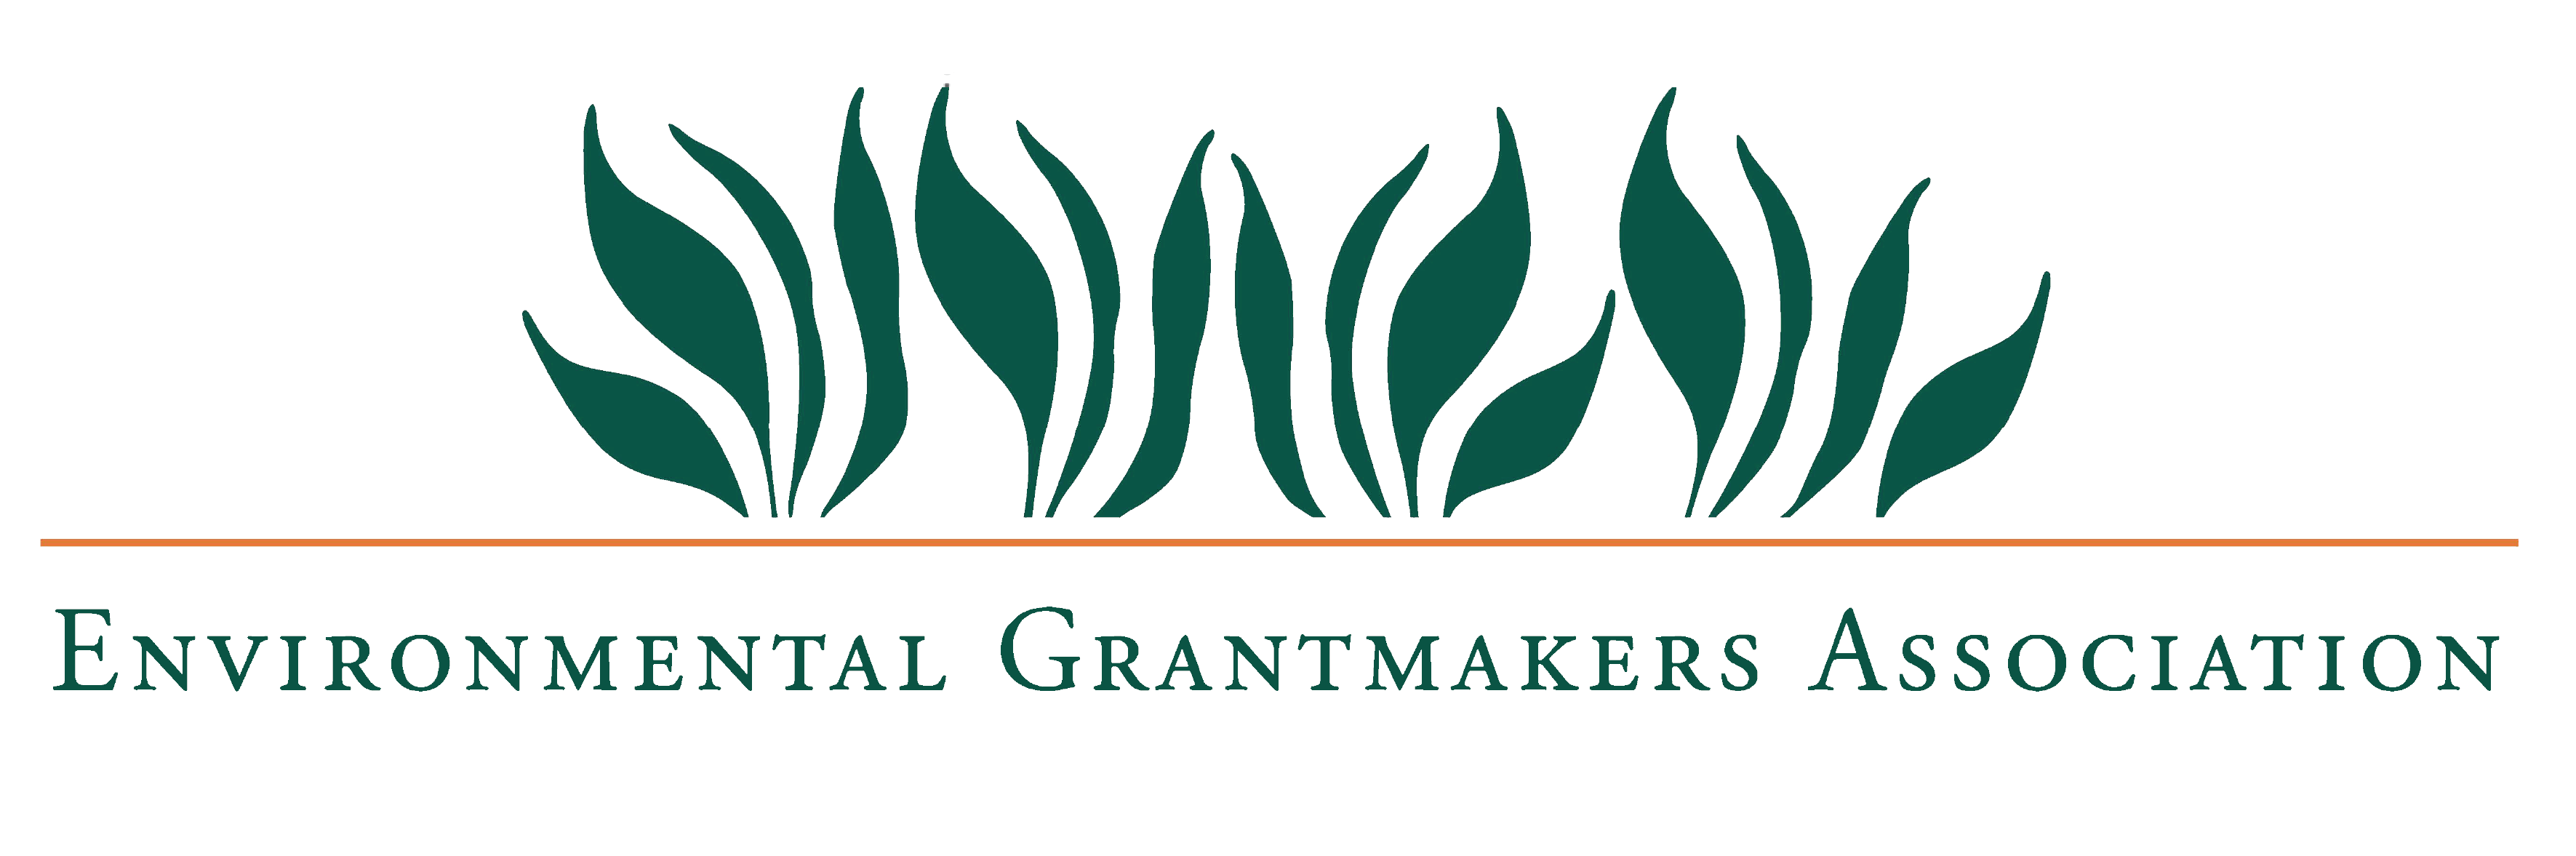 Environmental Grantmakers Association logo